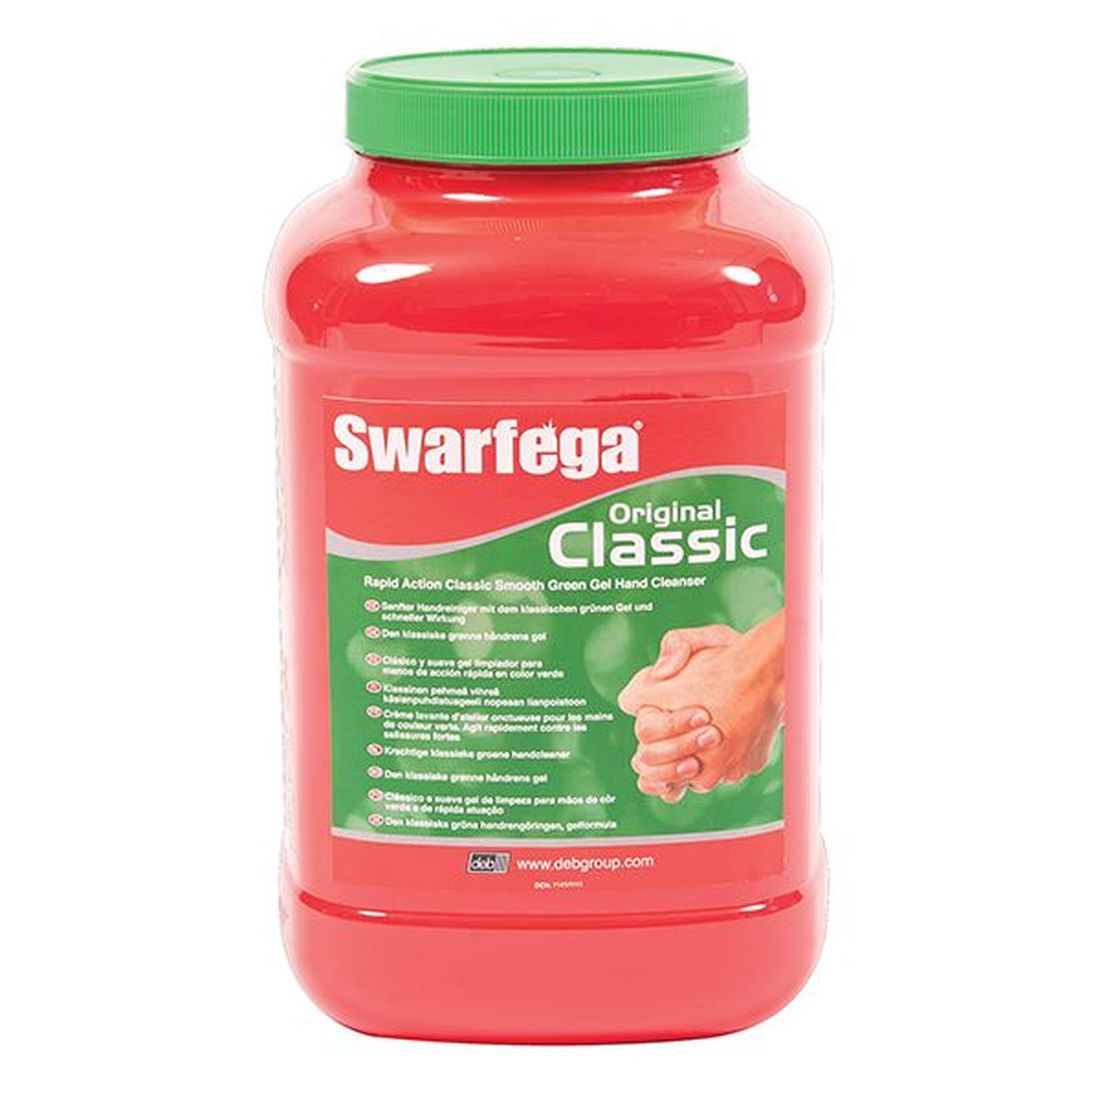 Swarfega Original Classic Hand Cleaner 4.5 litre                                         